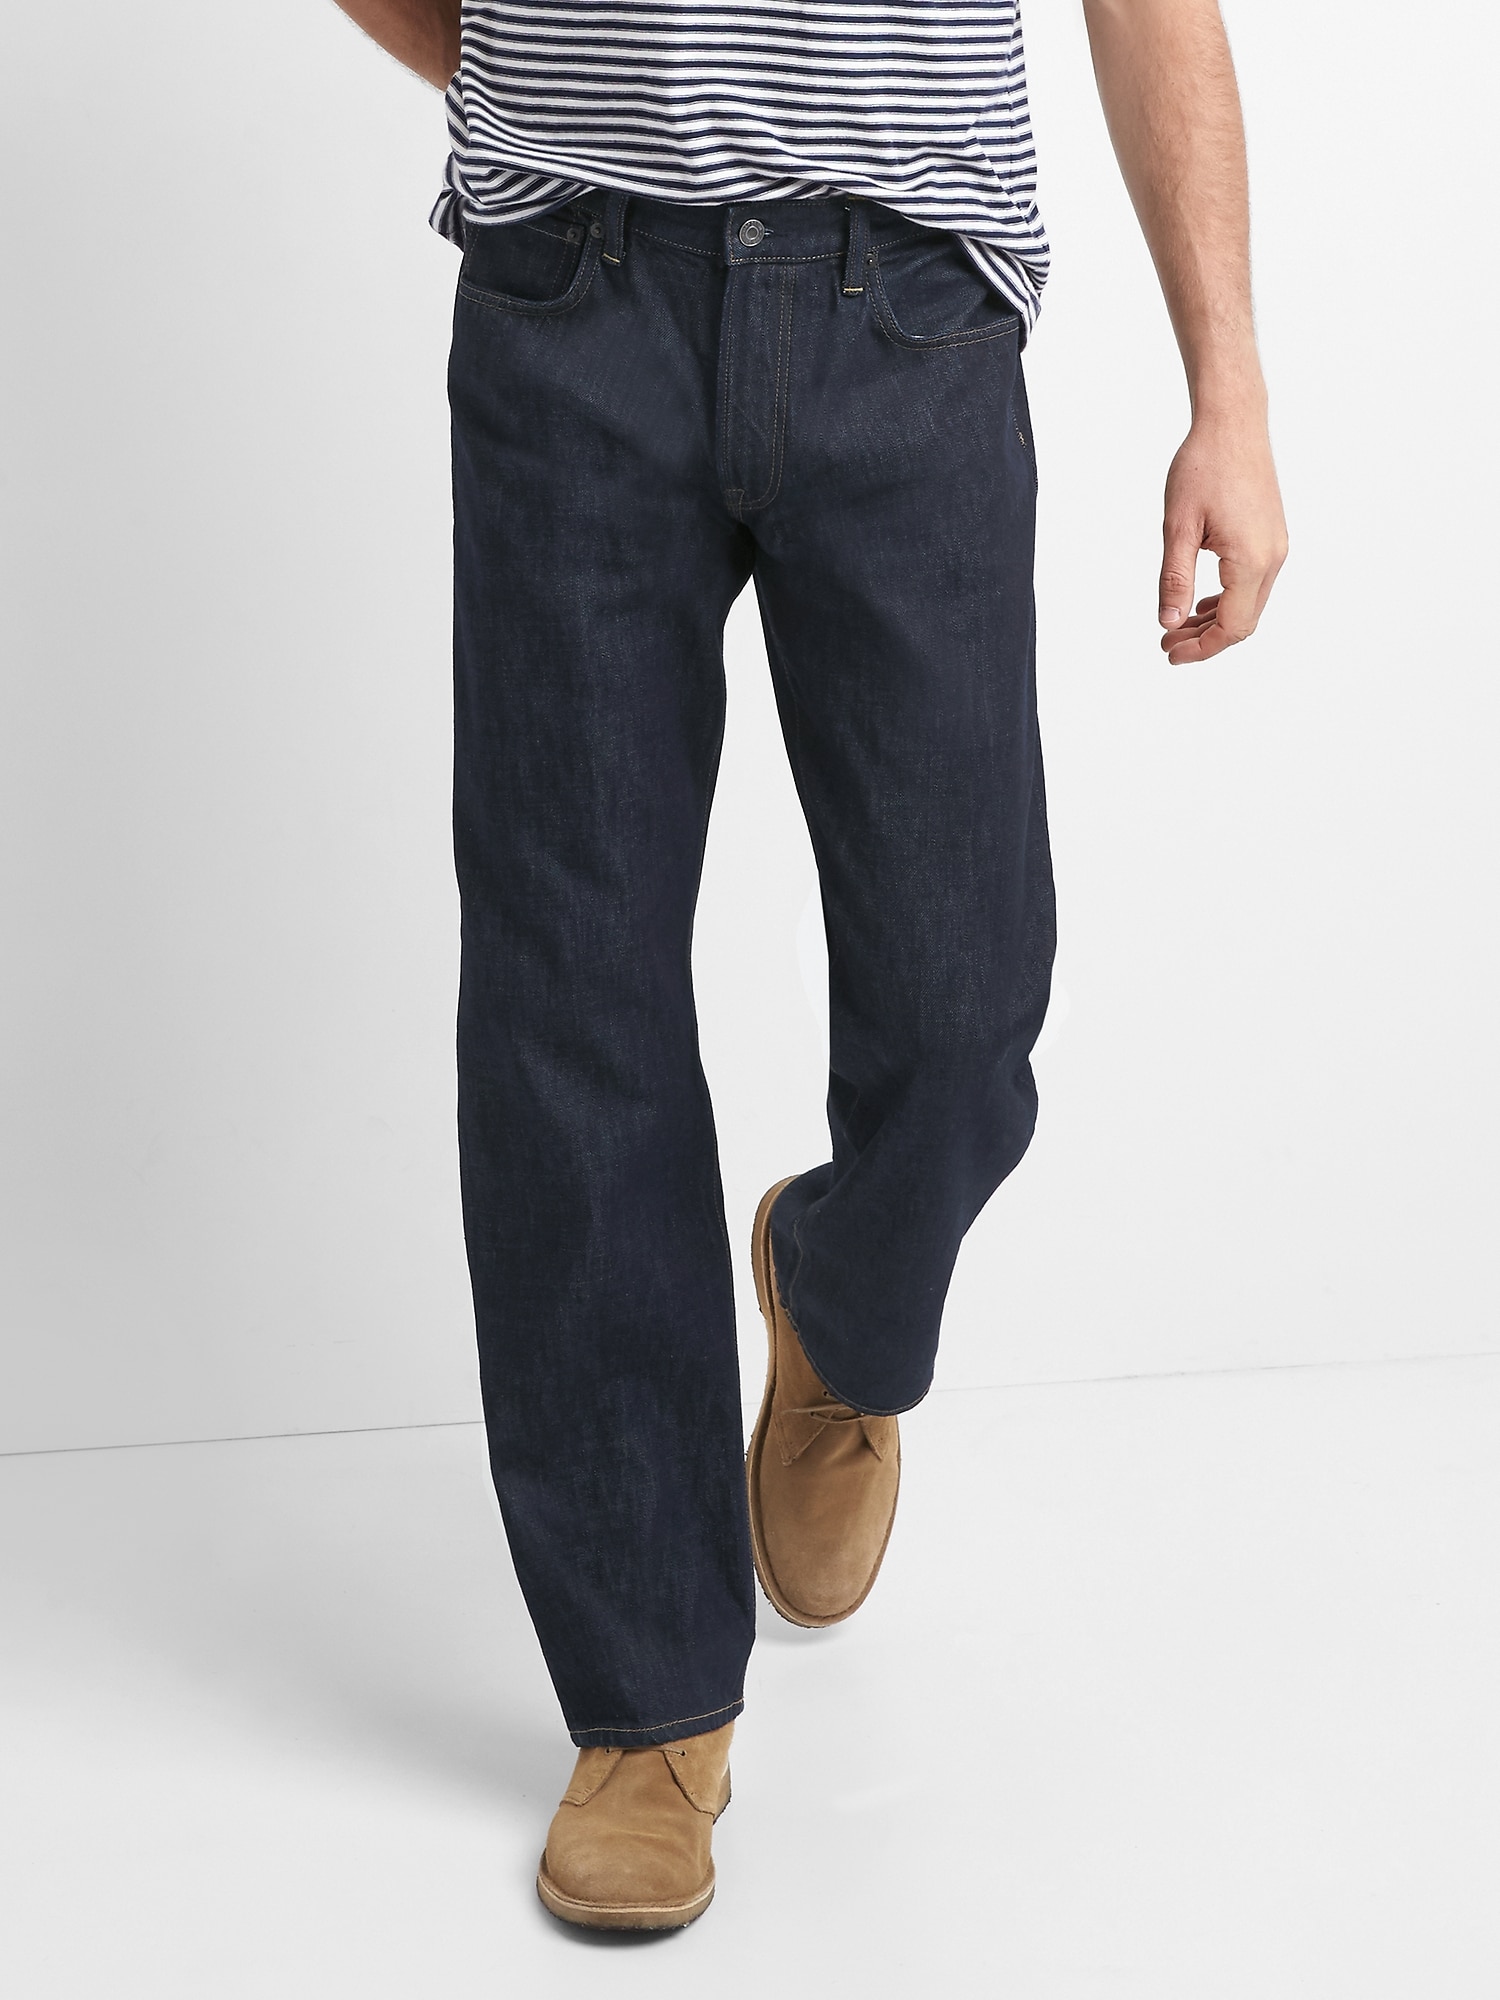 gap standard jeans